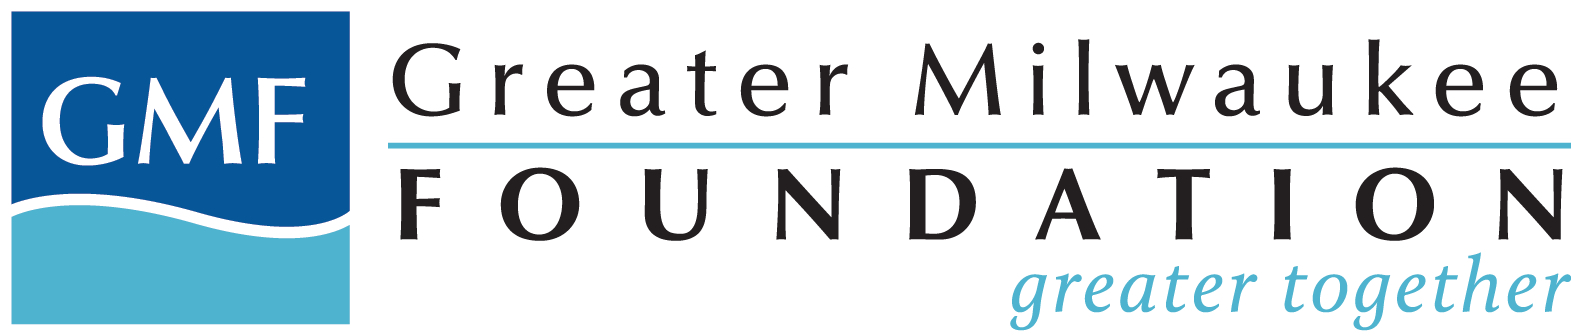 Greater Milwaukee Foundation Logo